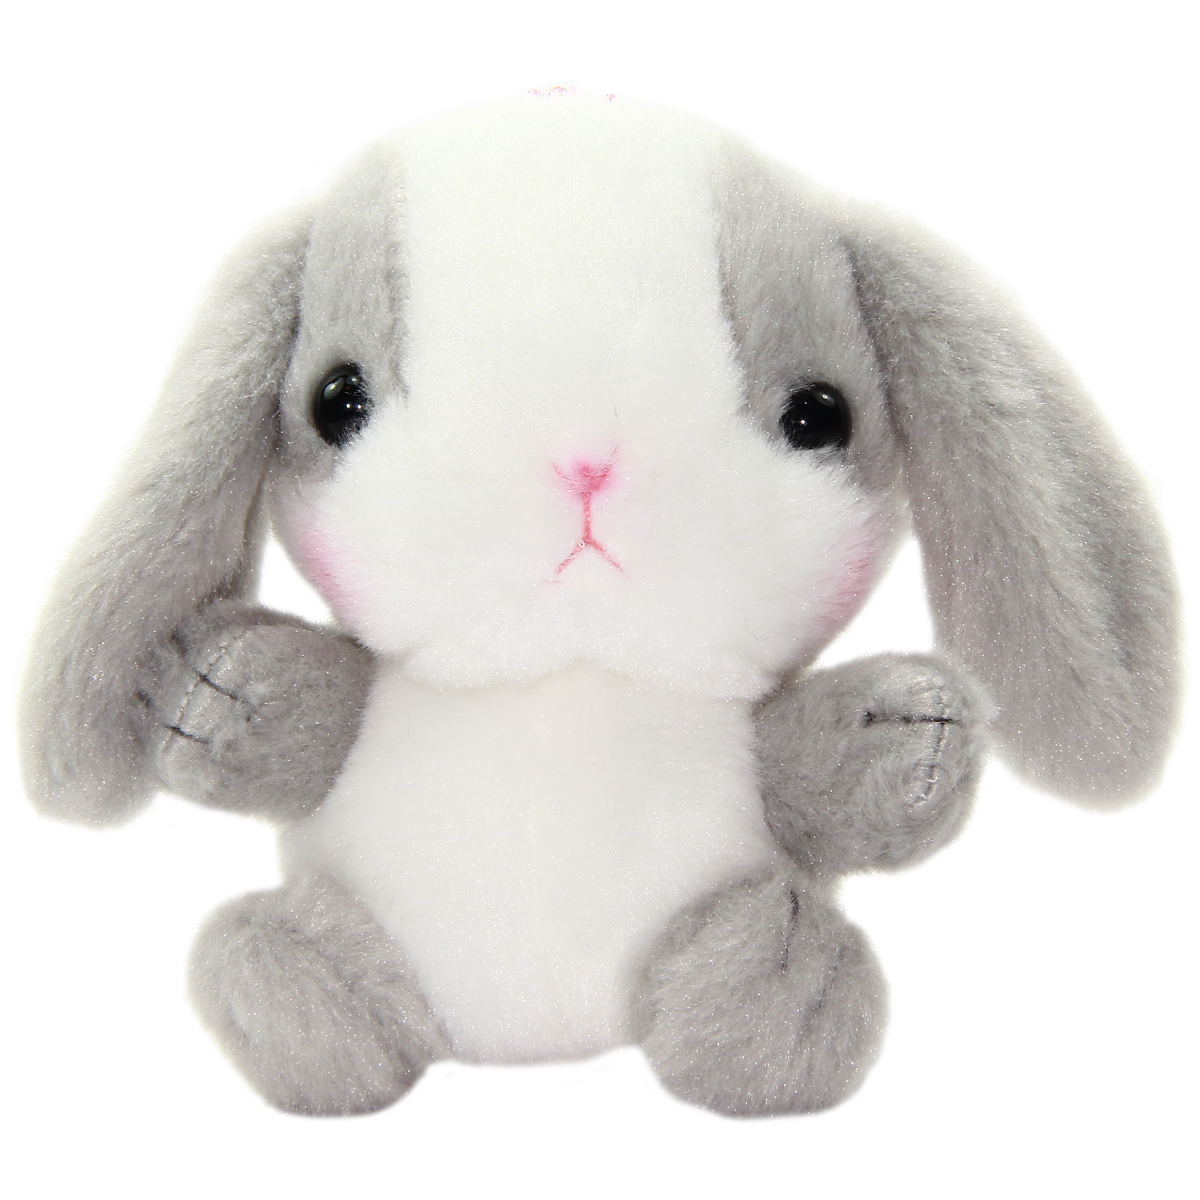 Amuse Bunny Plushie Cute Stuffed Animal Toy Grey / White 5 Inches